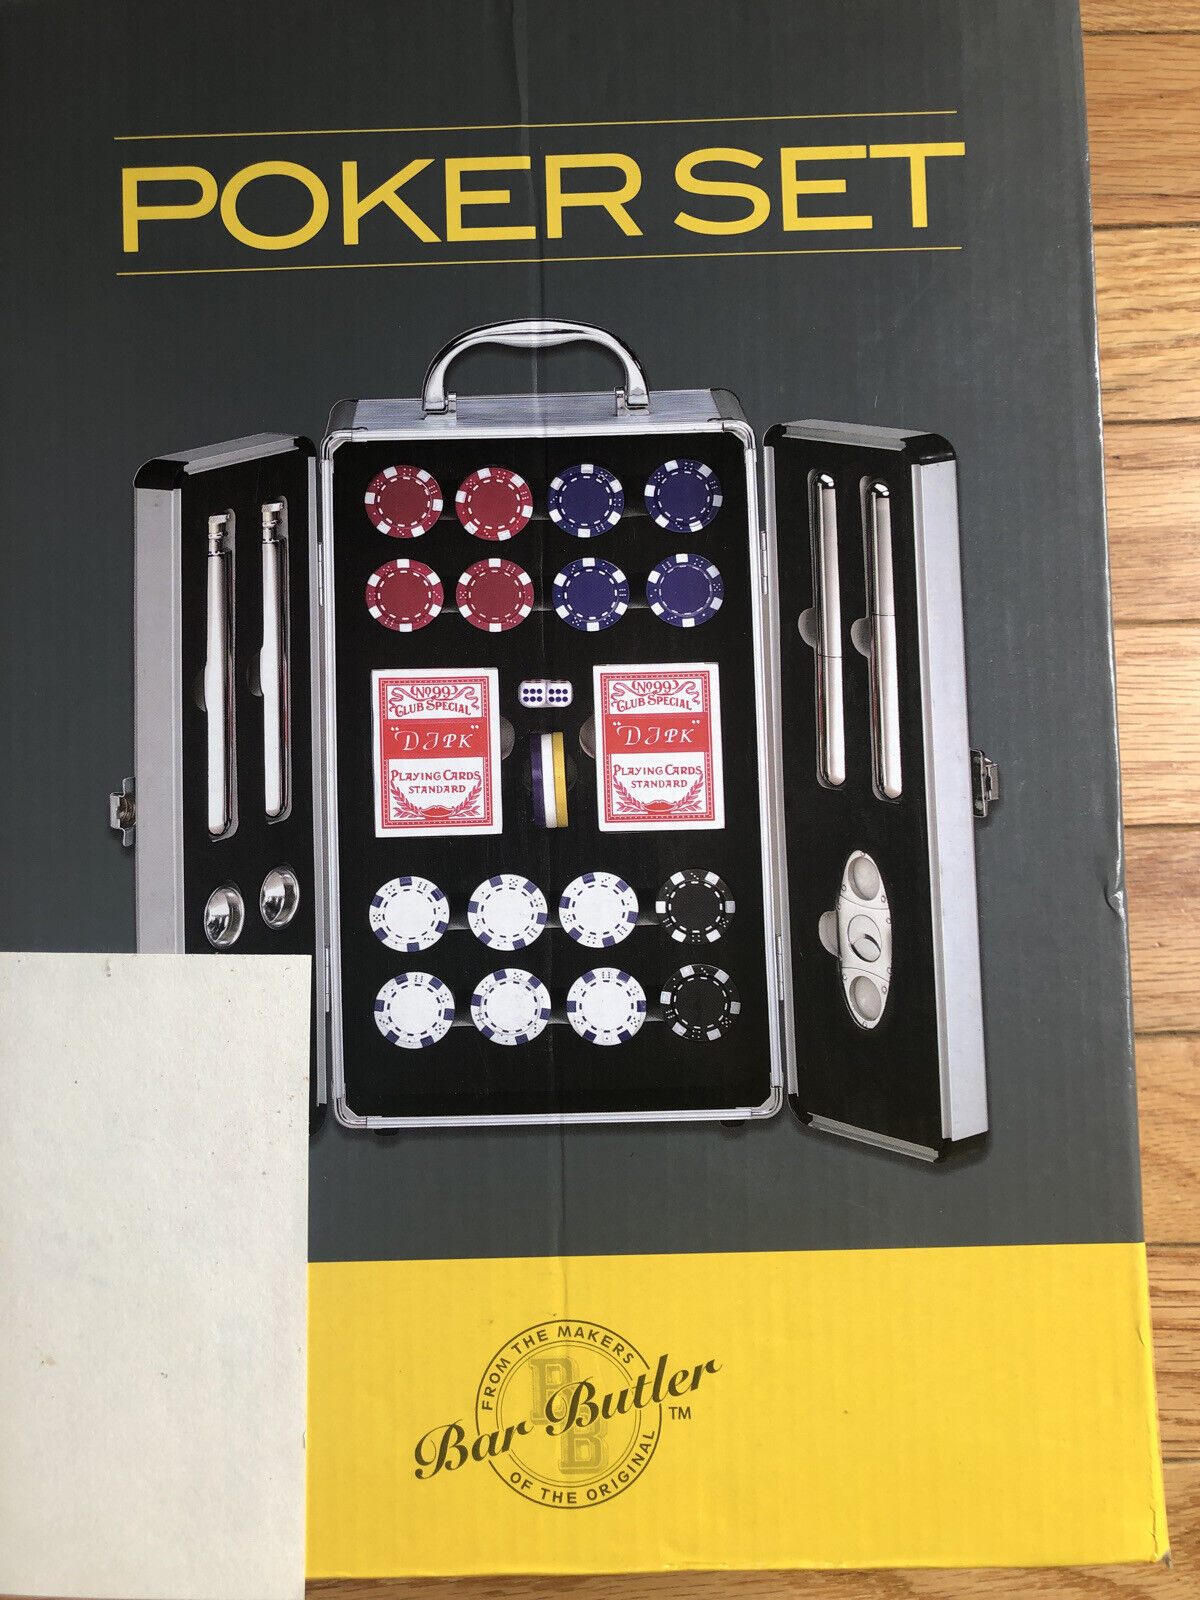 Bar Buttler Complete Family Game Day Poker Complete Set Game Gift Men’s